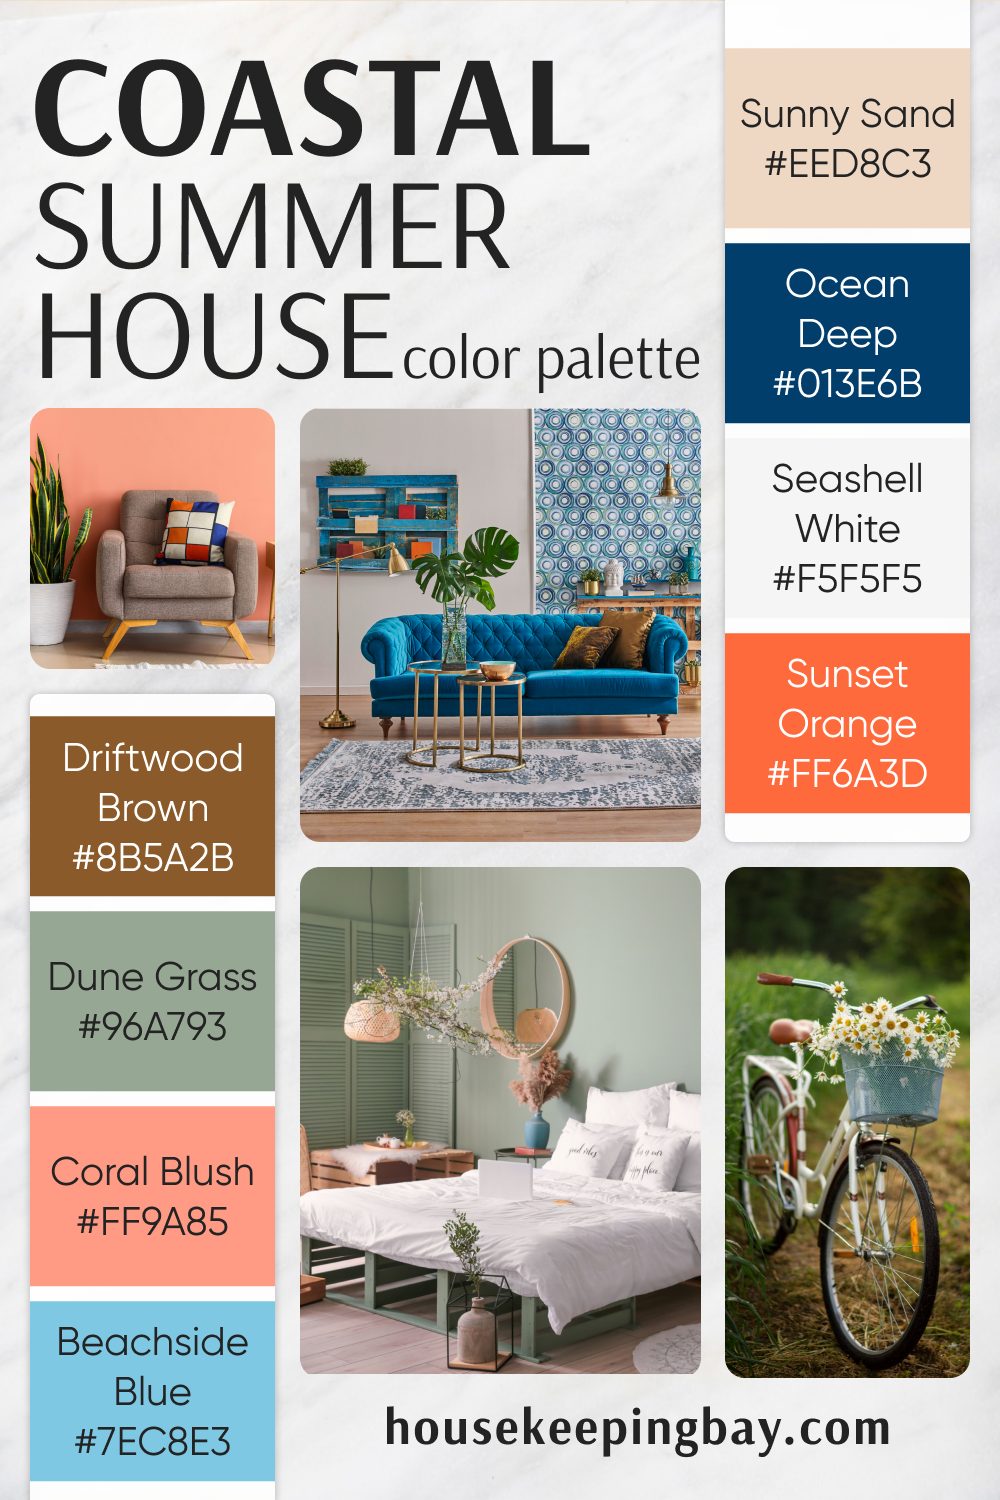 Coastal Summer House – Color Palette